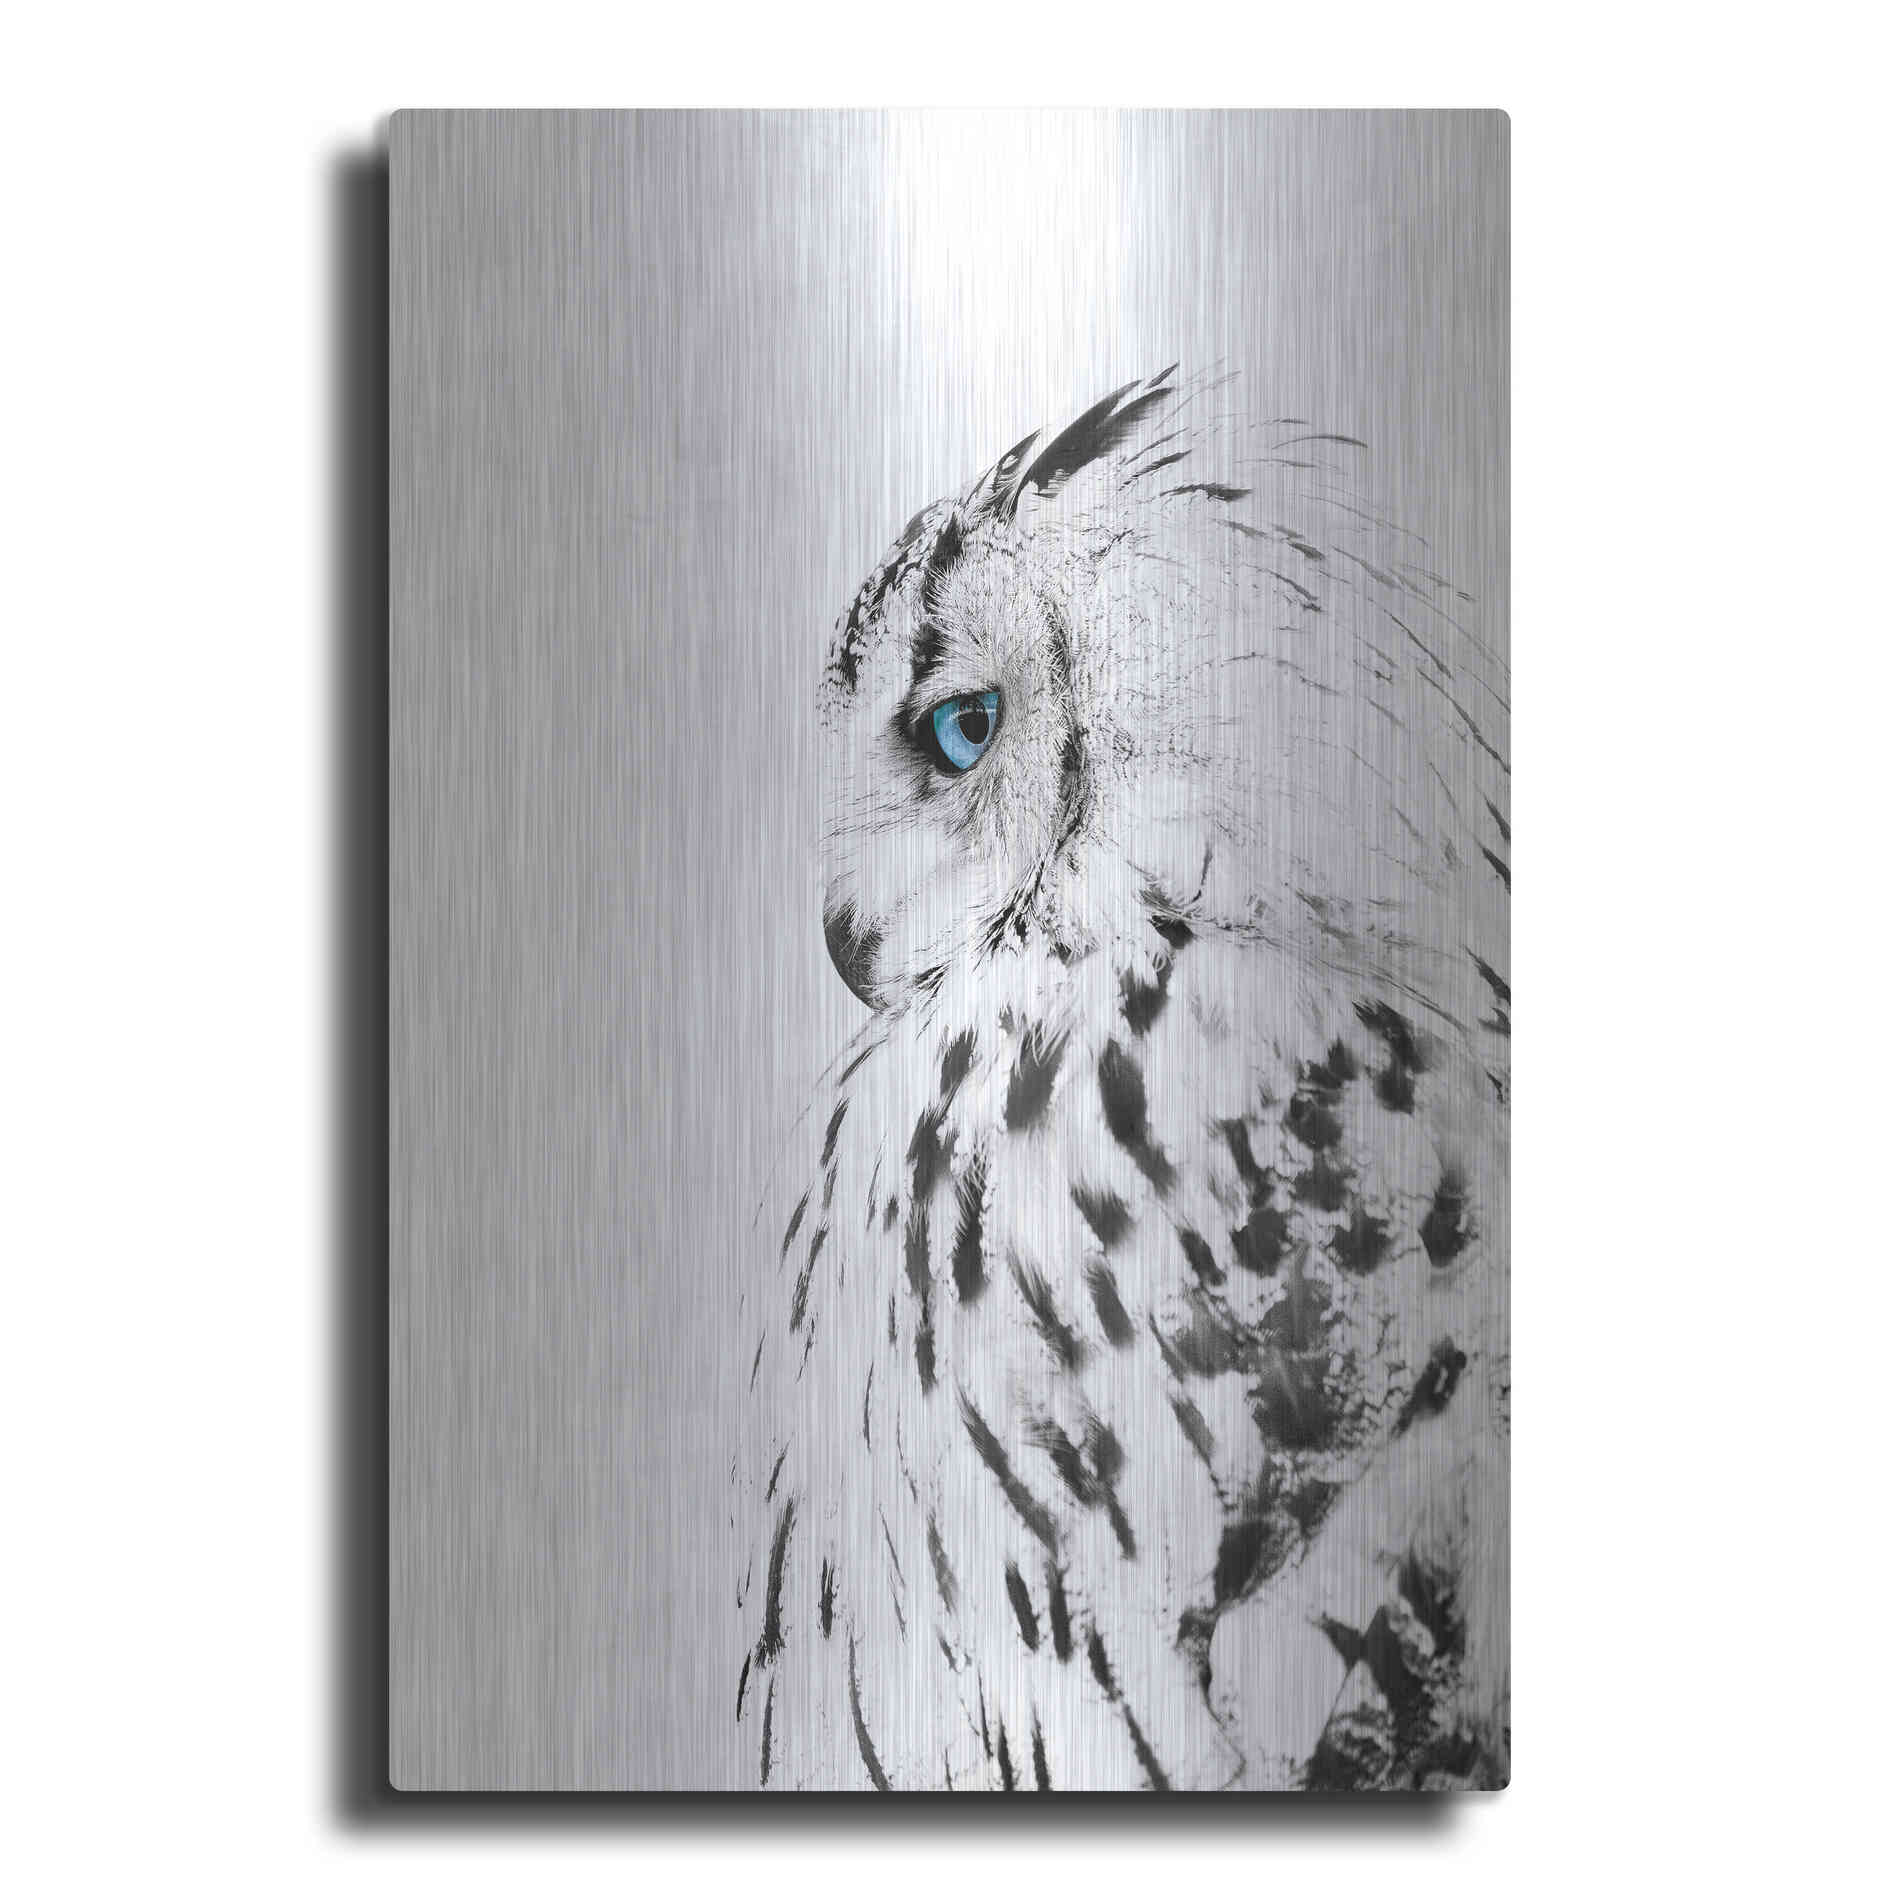 Luxe Metal Art 'White Owl' by Design Fabrikken, Metal Wall Art